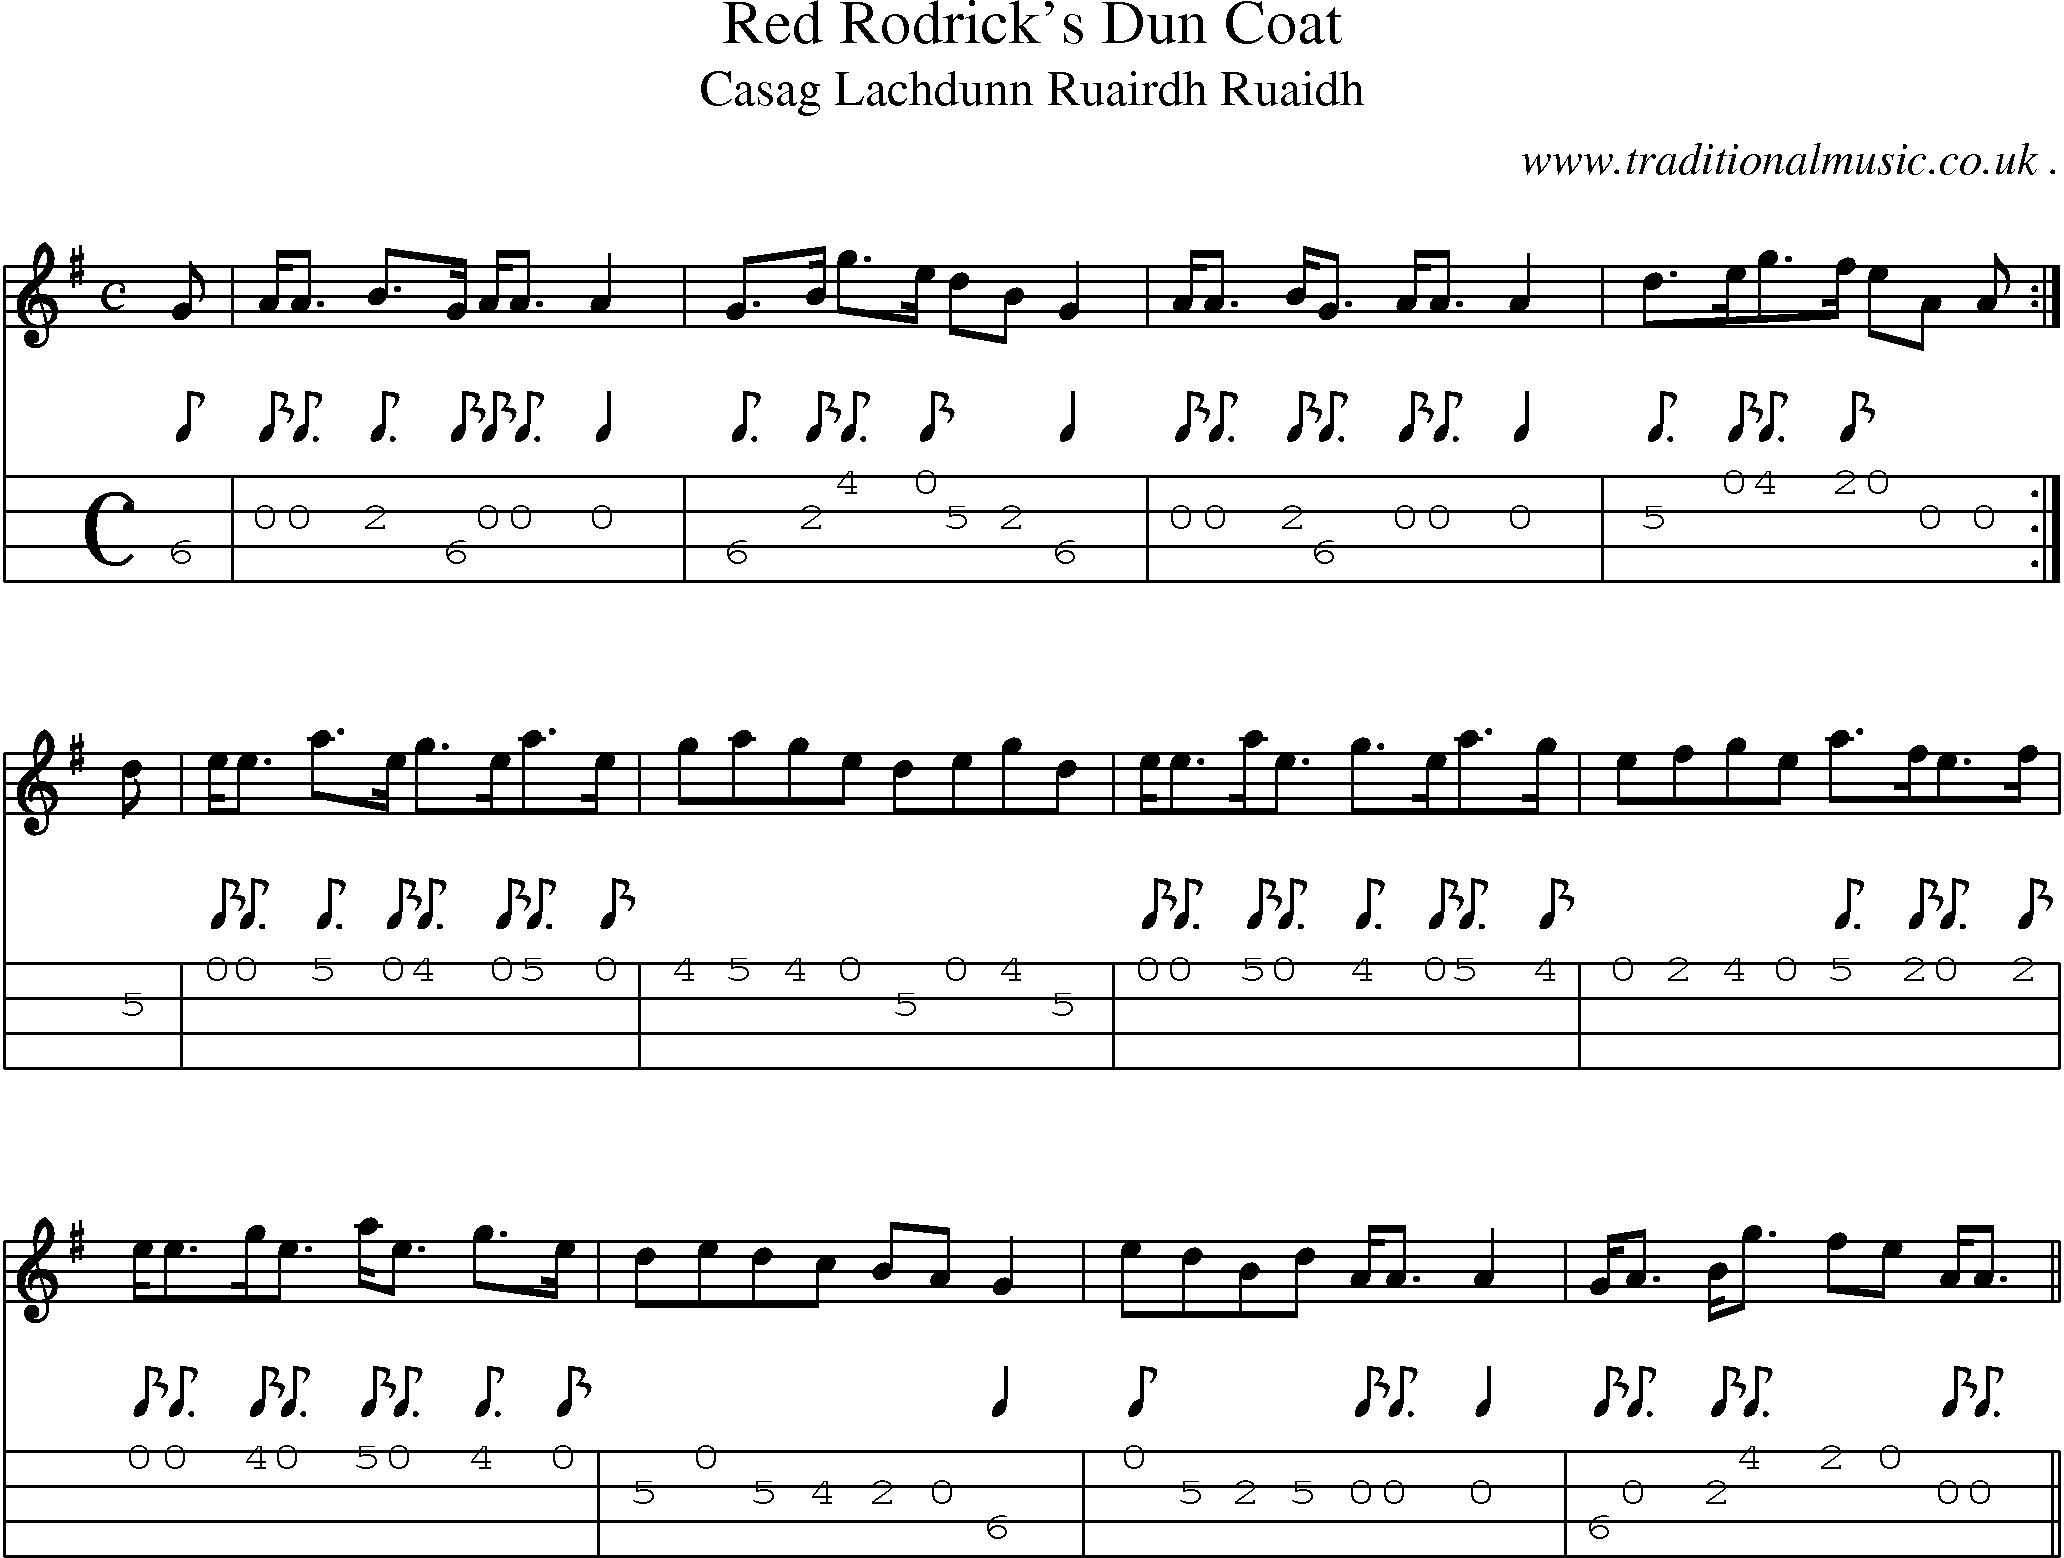 Sheet-music  score, Chords and Mandolin Tabs for Red Rodricks Dun Coat